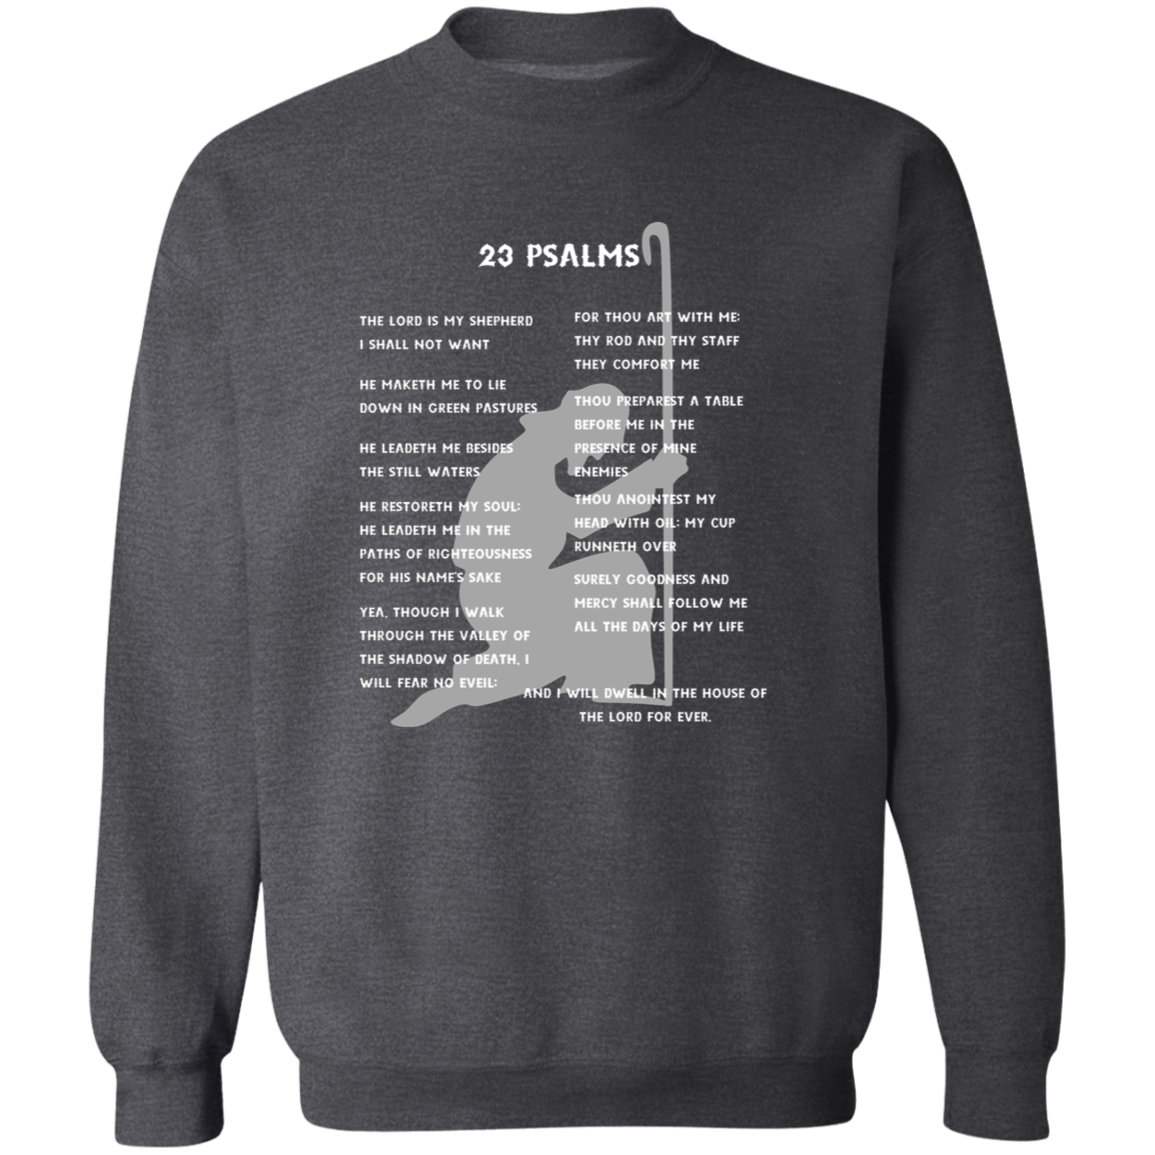 23 Psalms Crewneck Sweatshirt - White